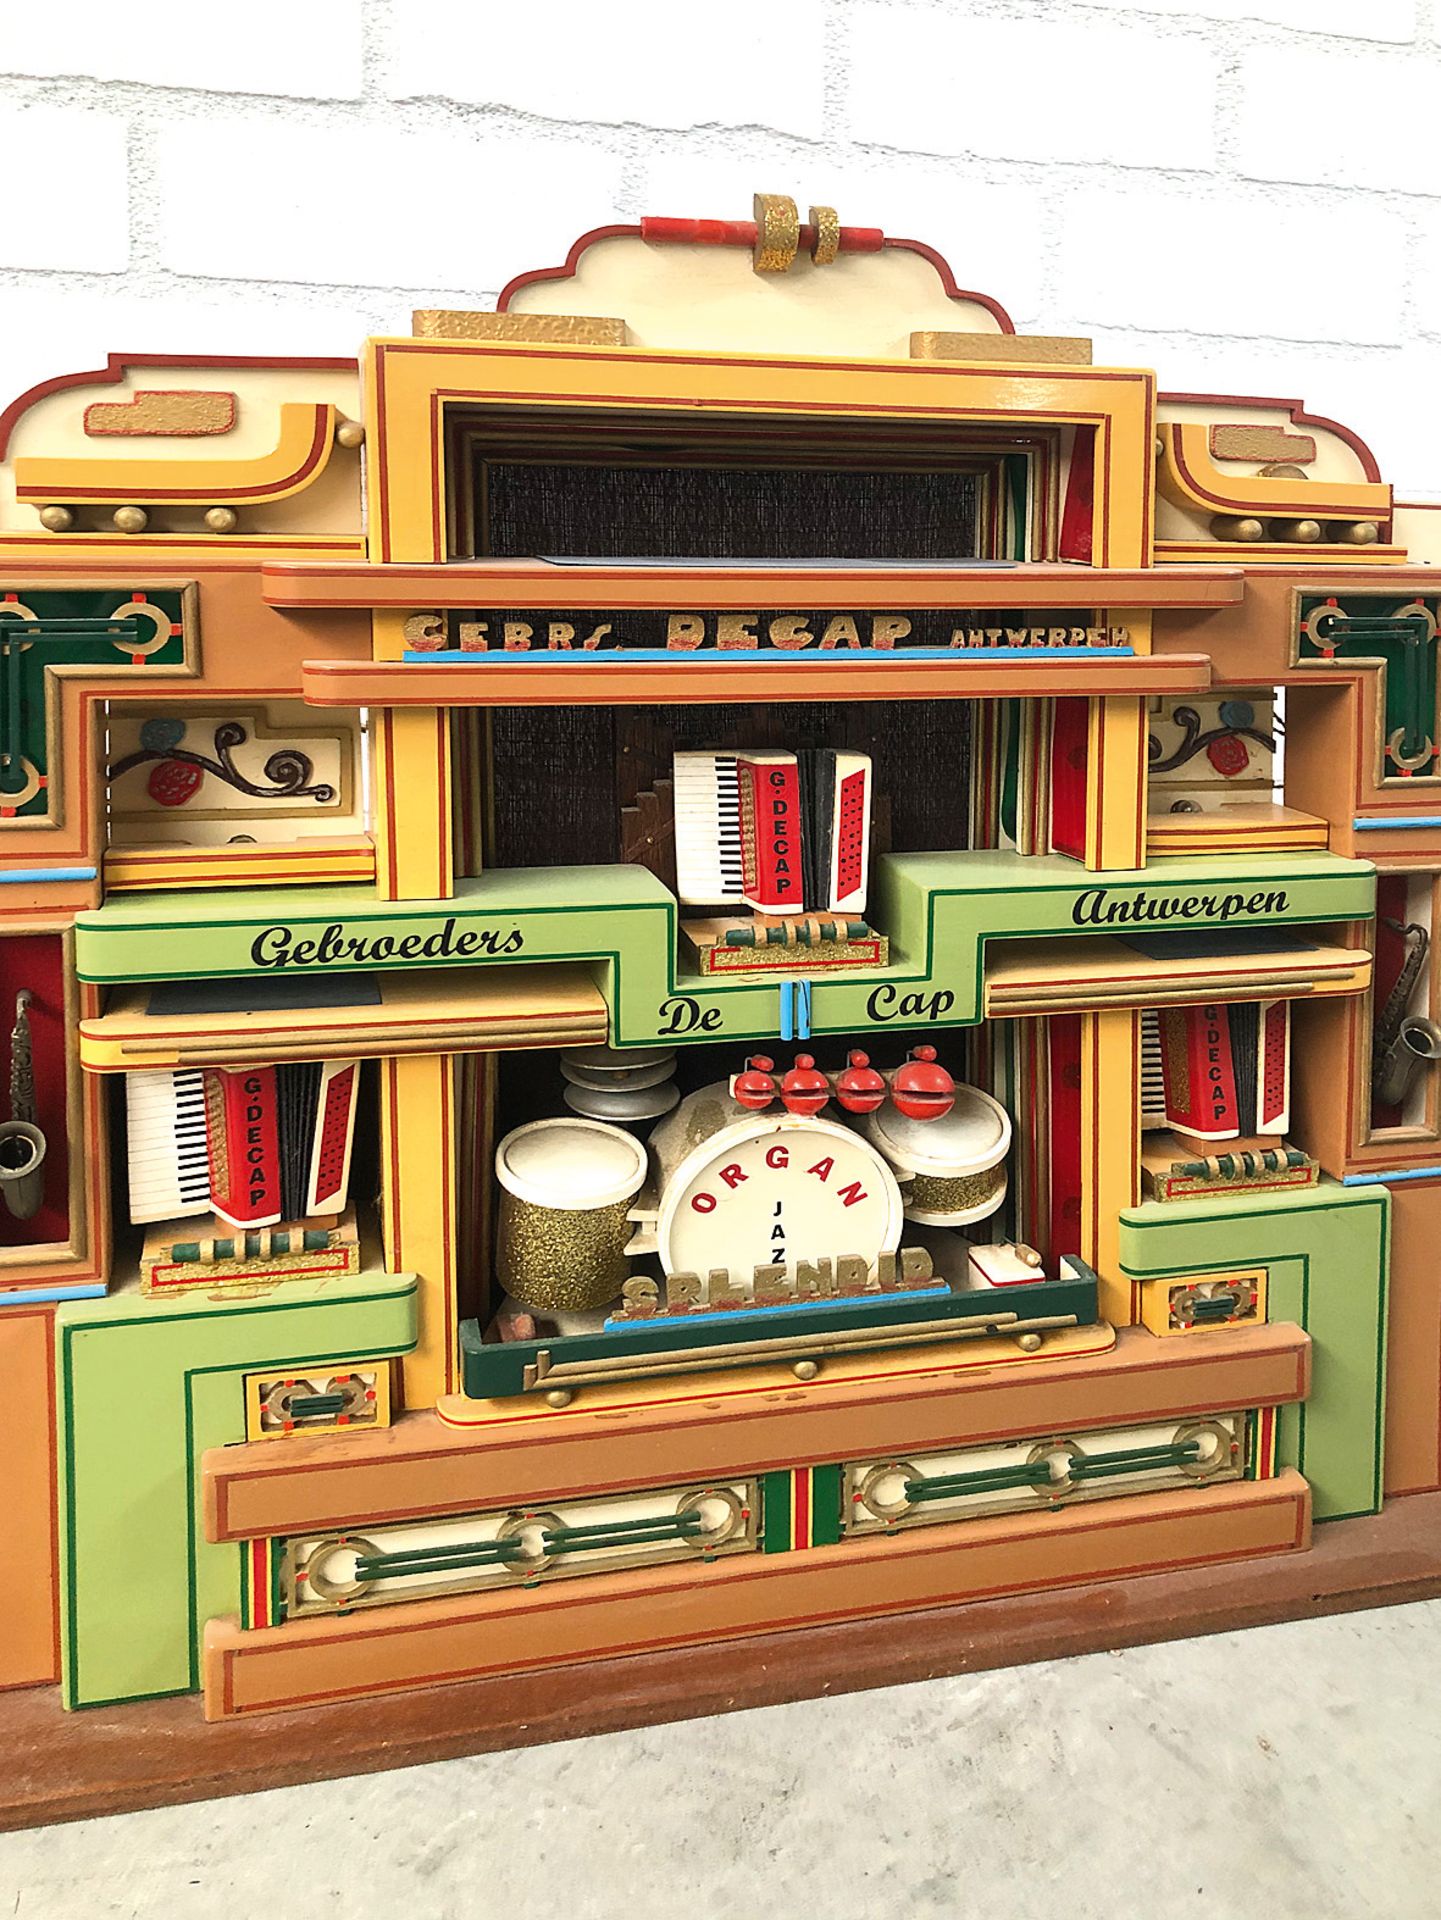 Scale Model of 121-key Decap "De Splendid" Dance Organ - Image 3 of 10